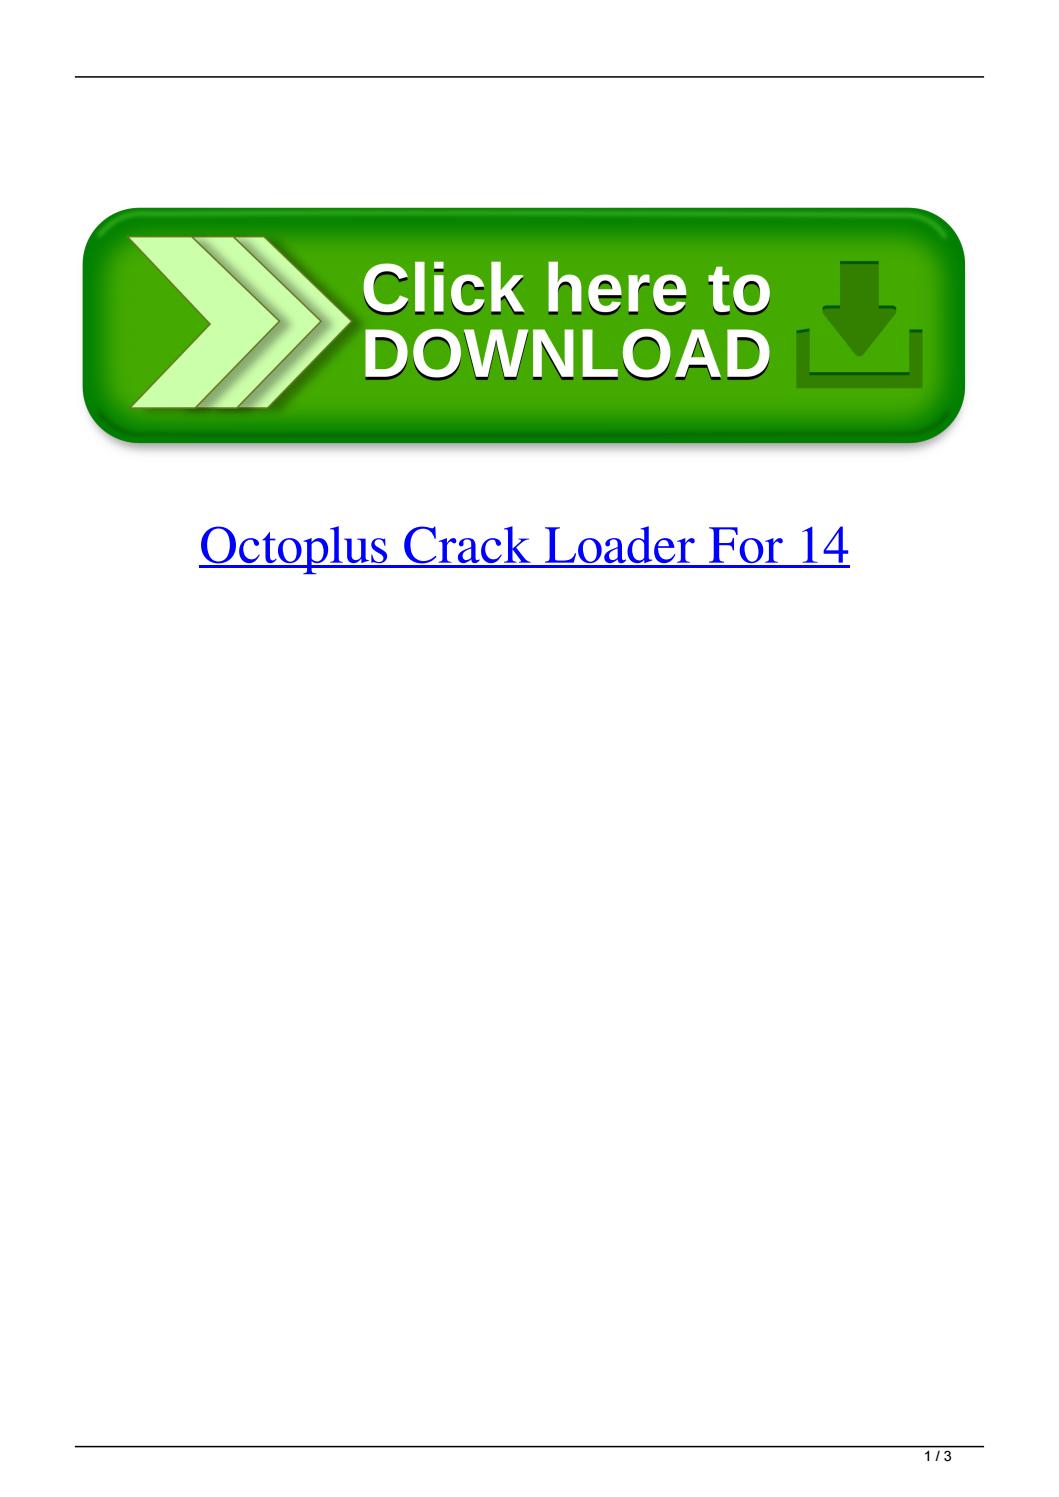 octoplus lg crack